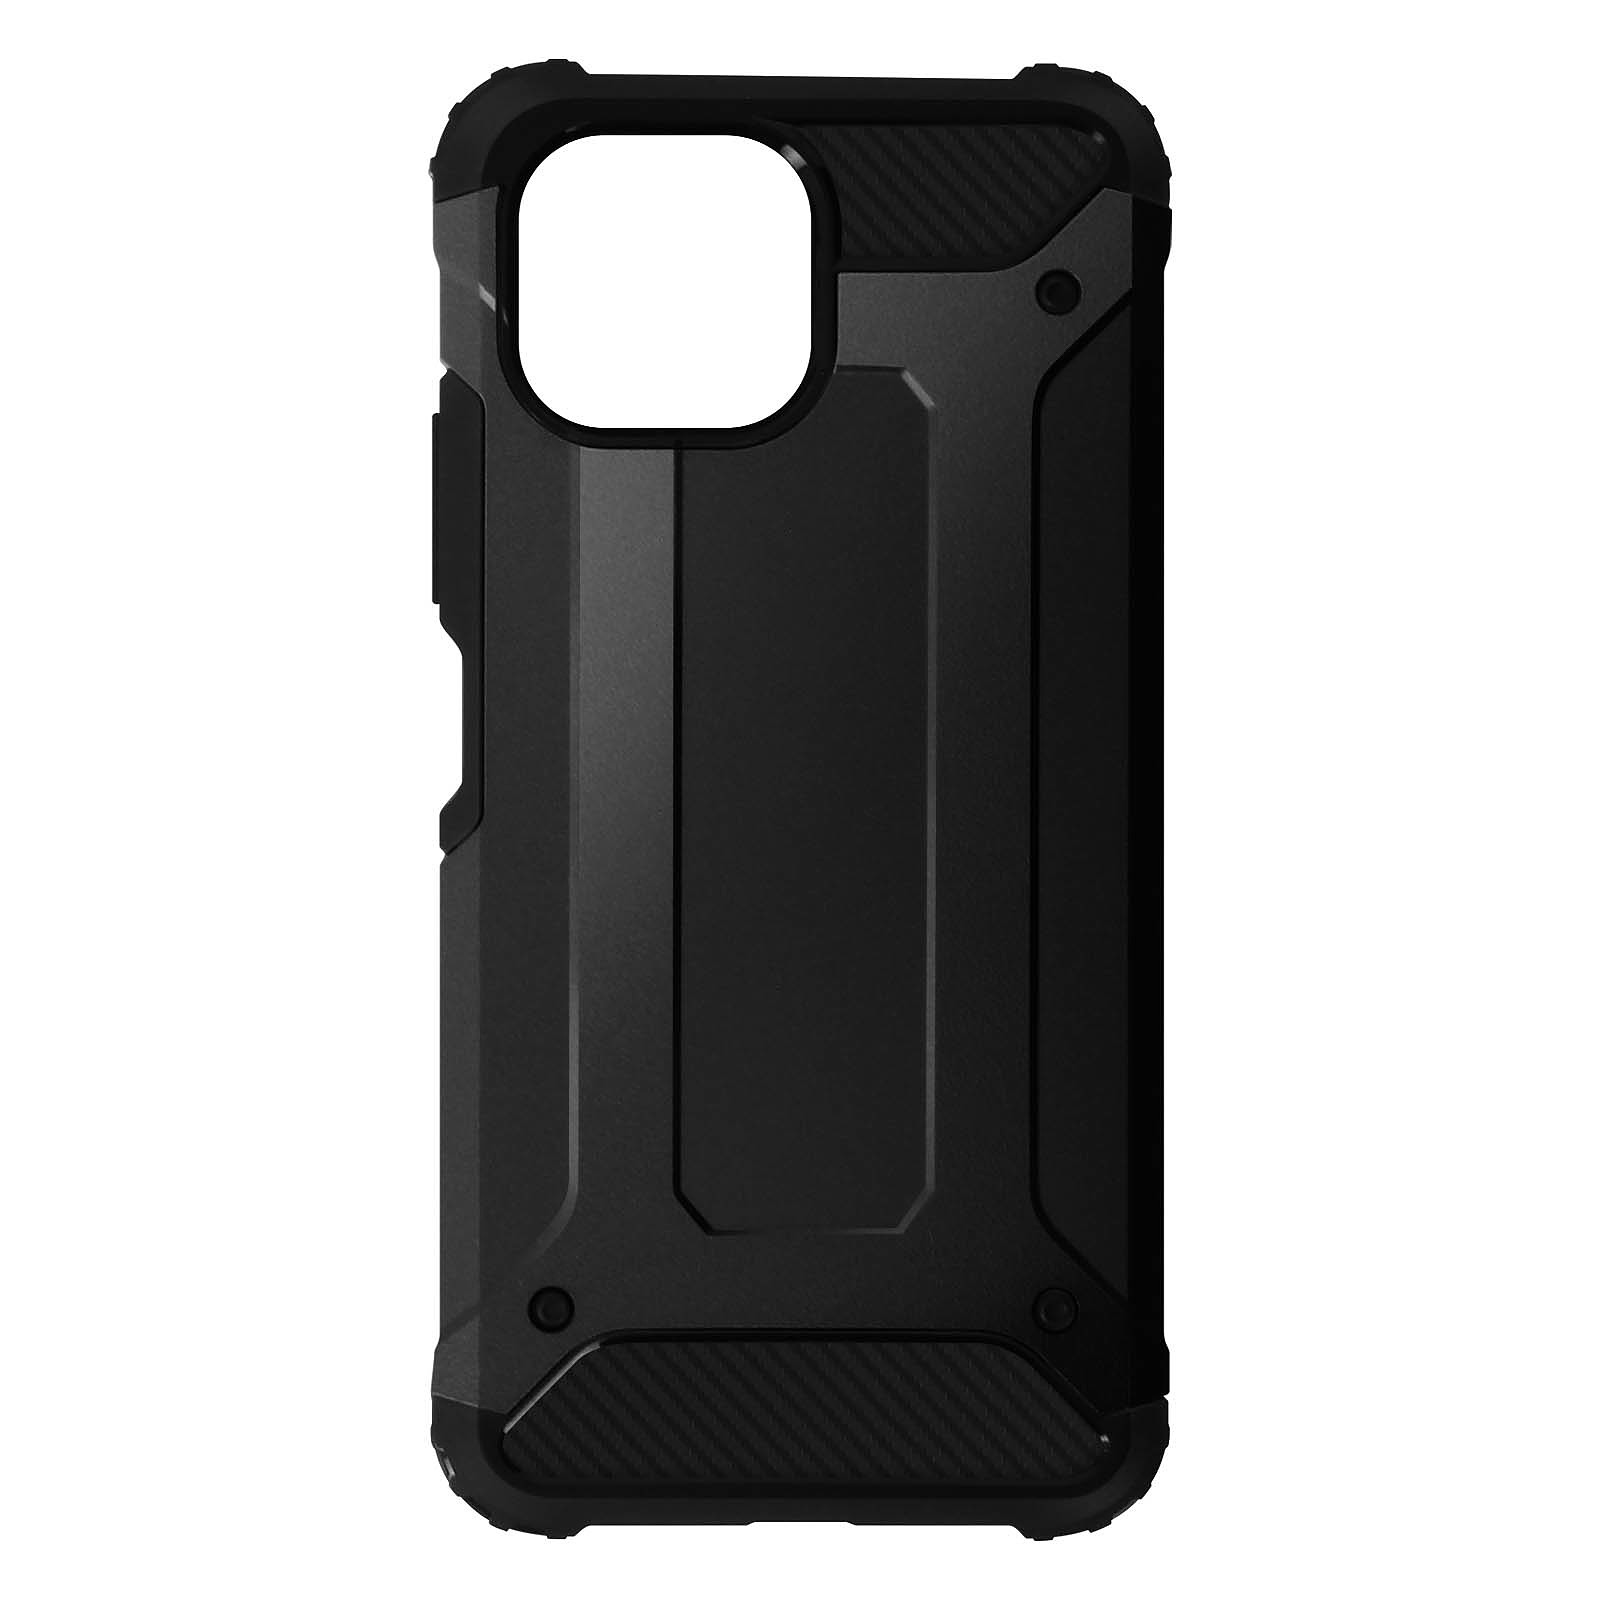 Avizar Coque pour Xiaomi Mi 11 Lite Design Relief Antichoc Serie Defender II Noir - Coque telephone Avizar